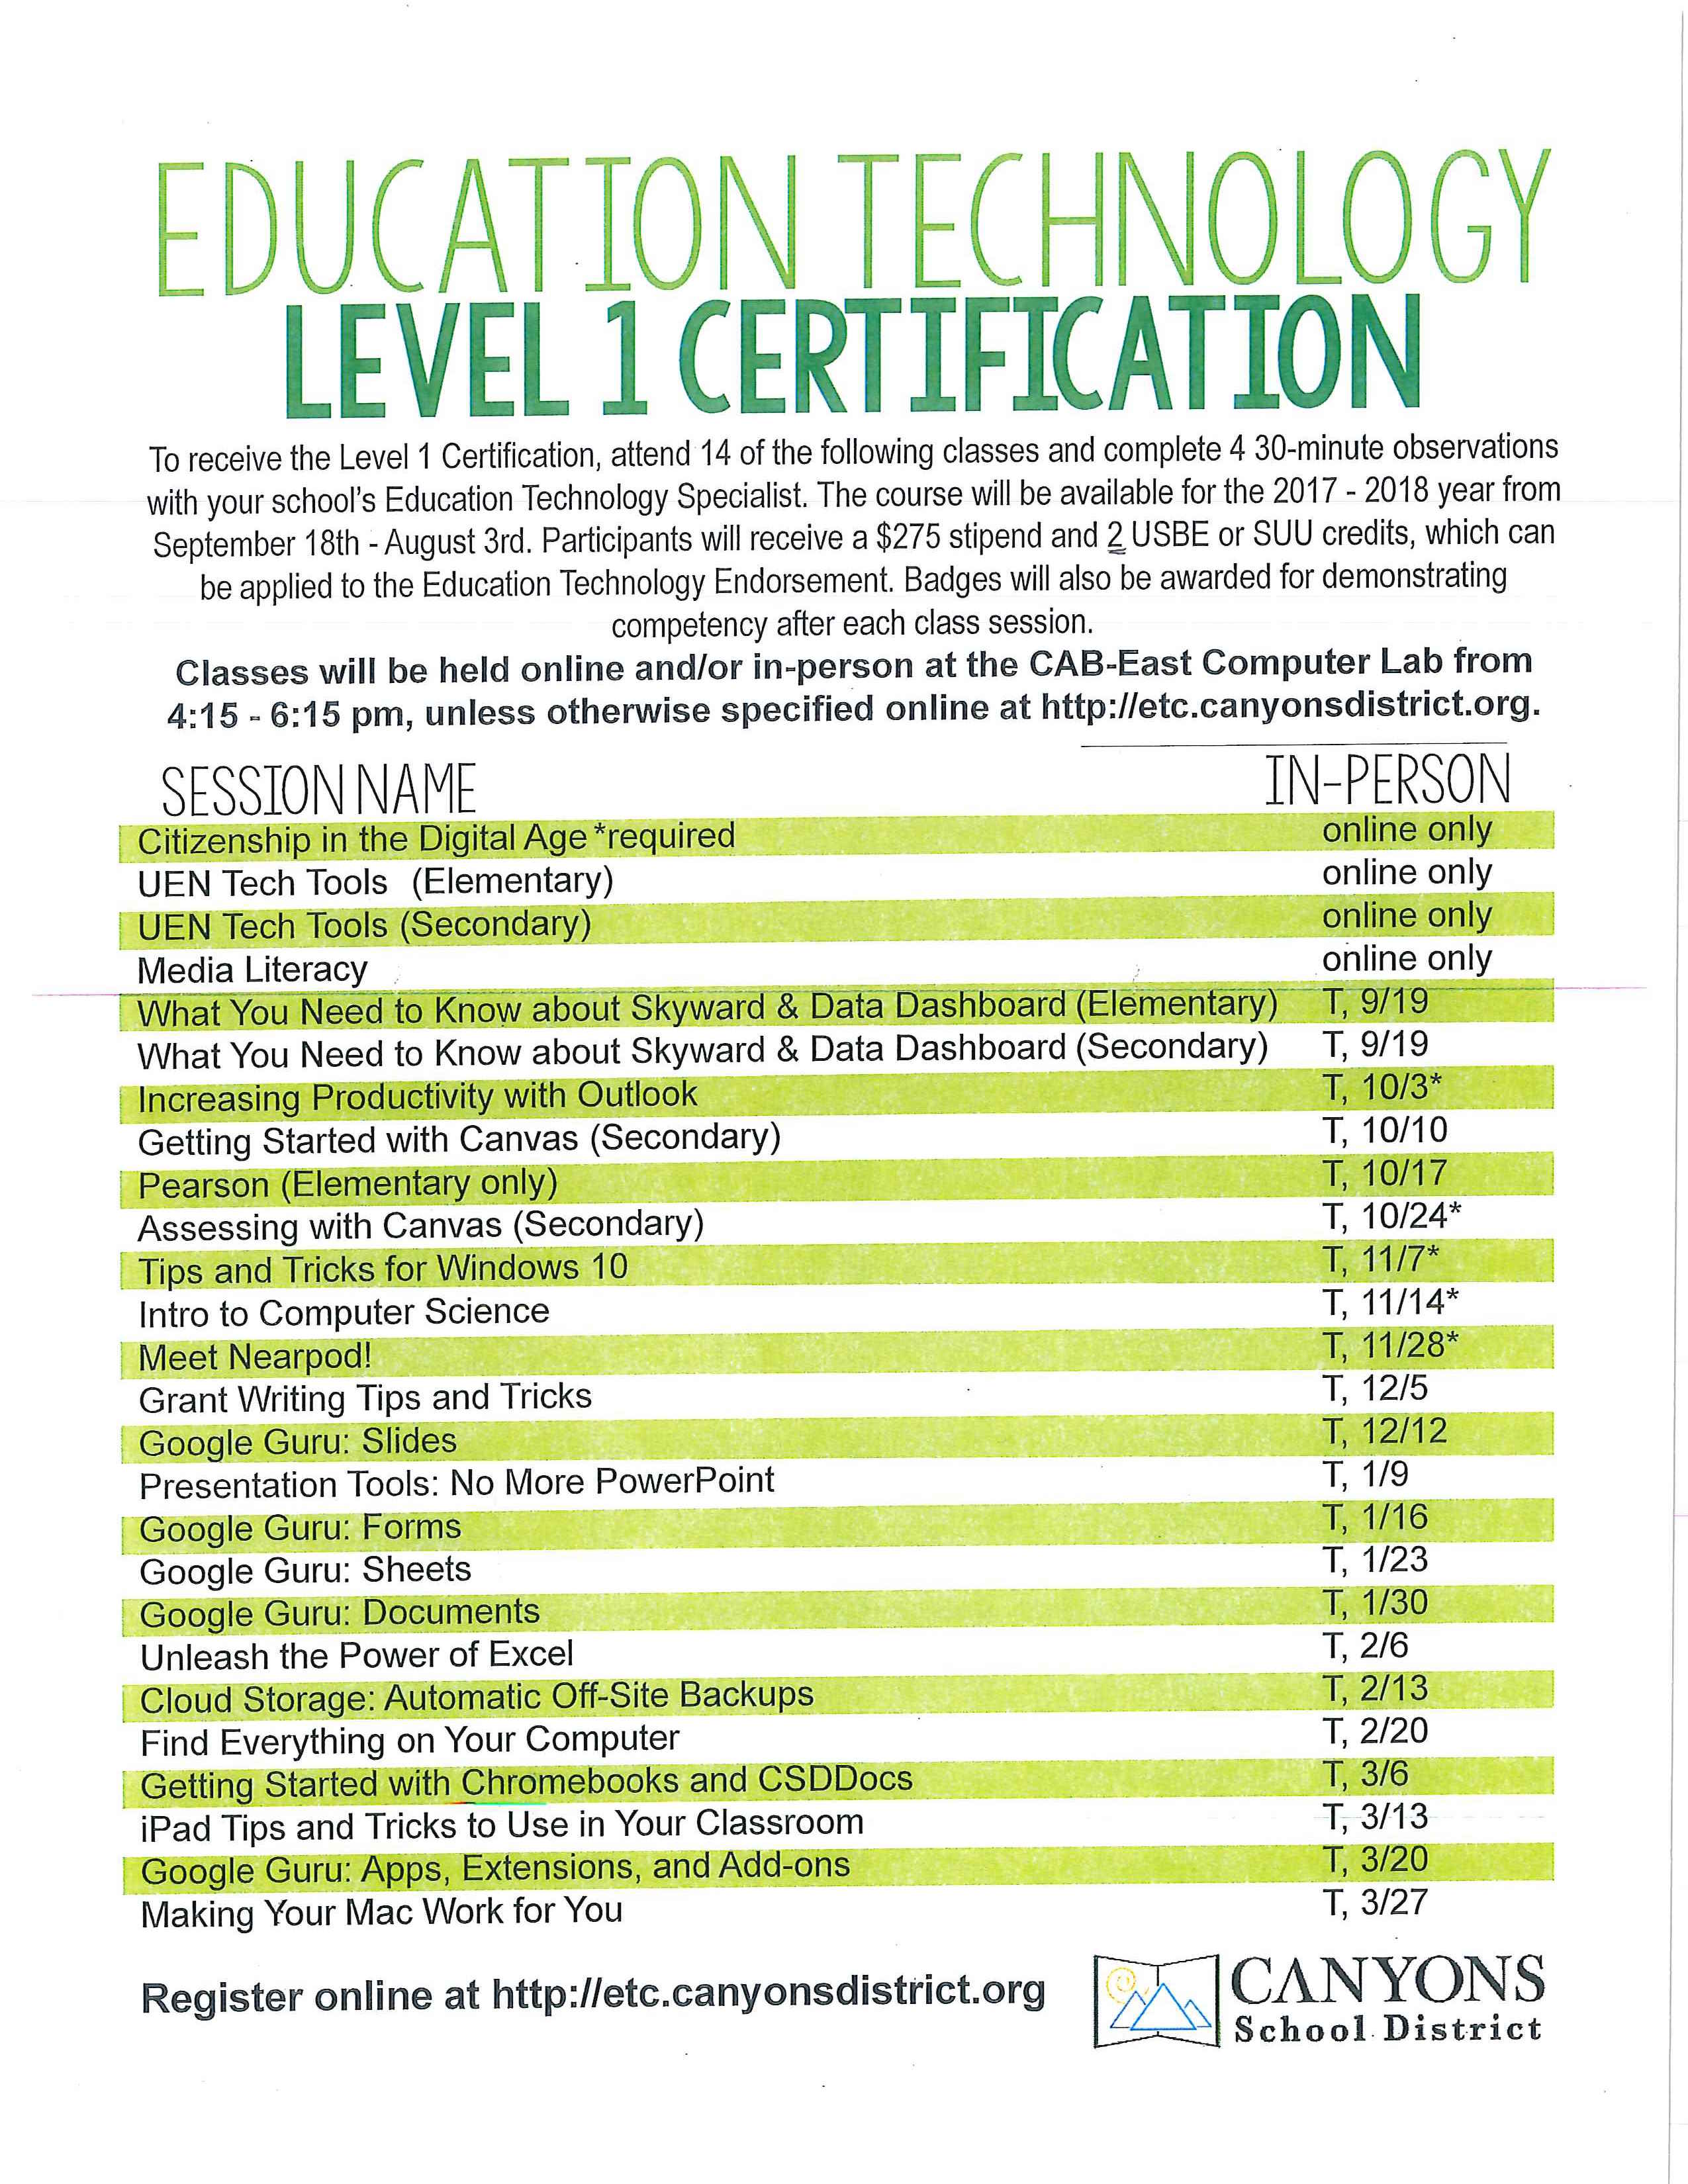 Level 1 Certification Courses.jpg